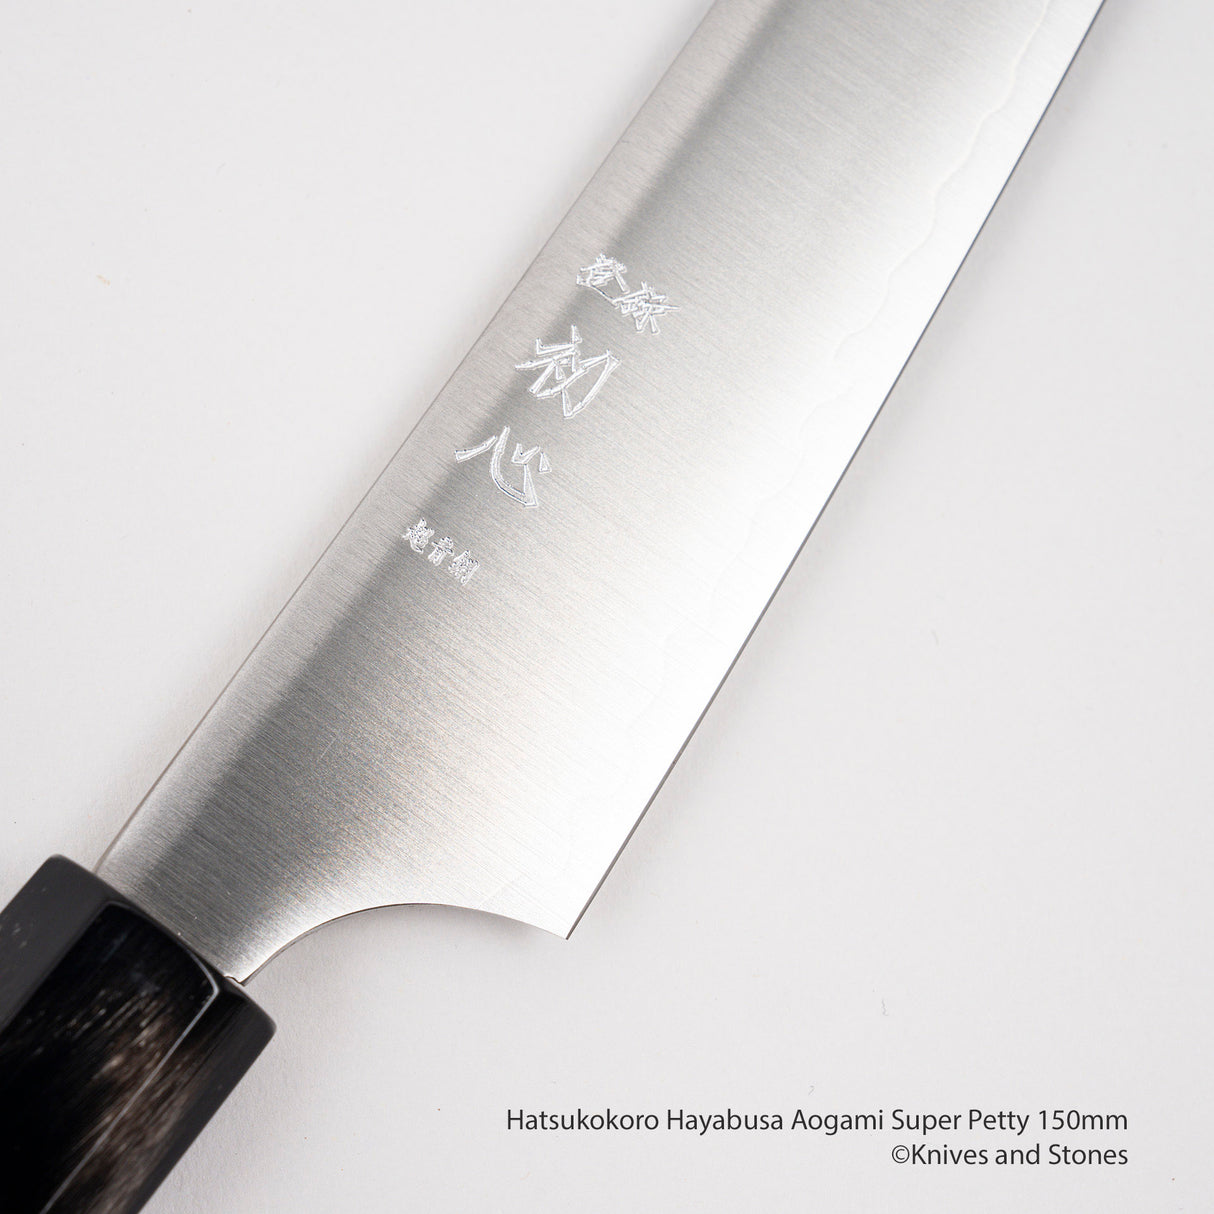 Hatsukokoro Hayabusa Aogami Super Petty 150mm